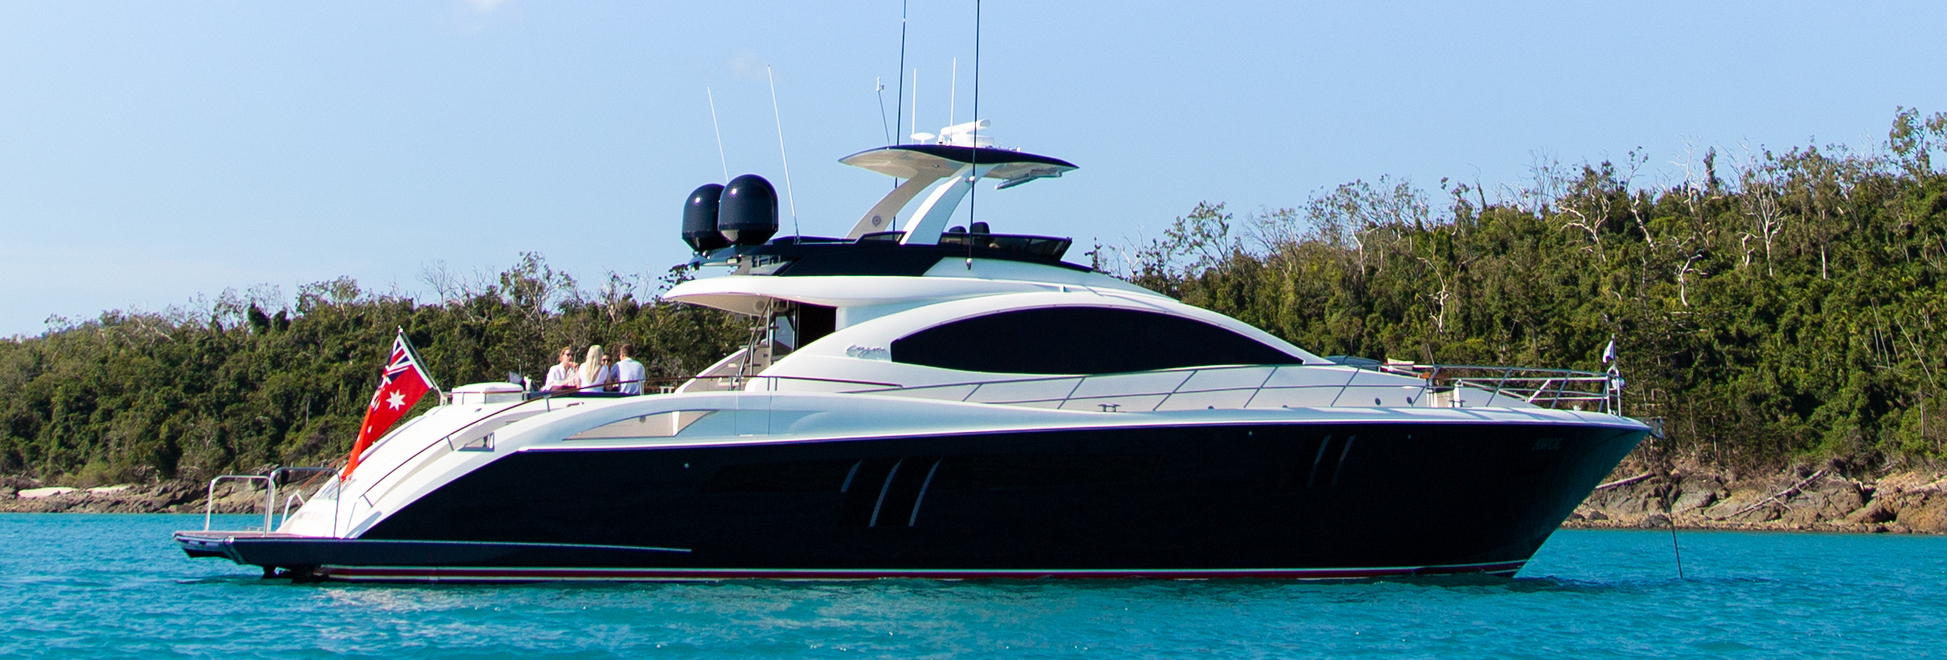 luxury motor yachts hamilton island